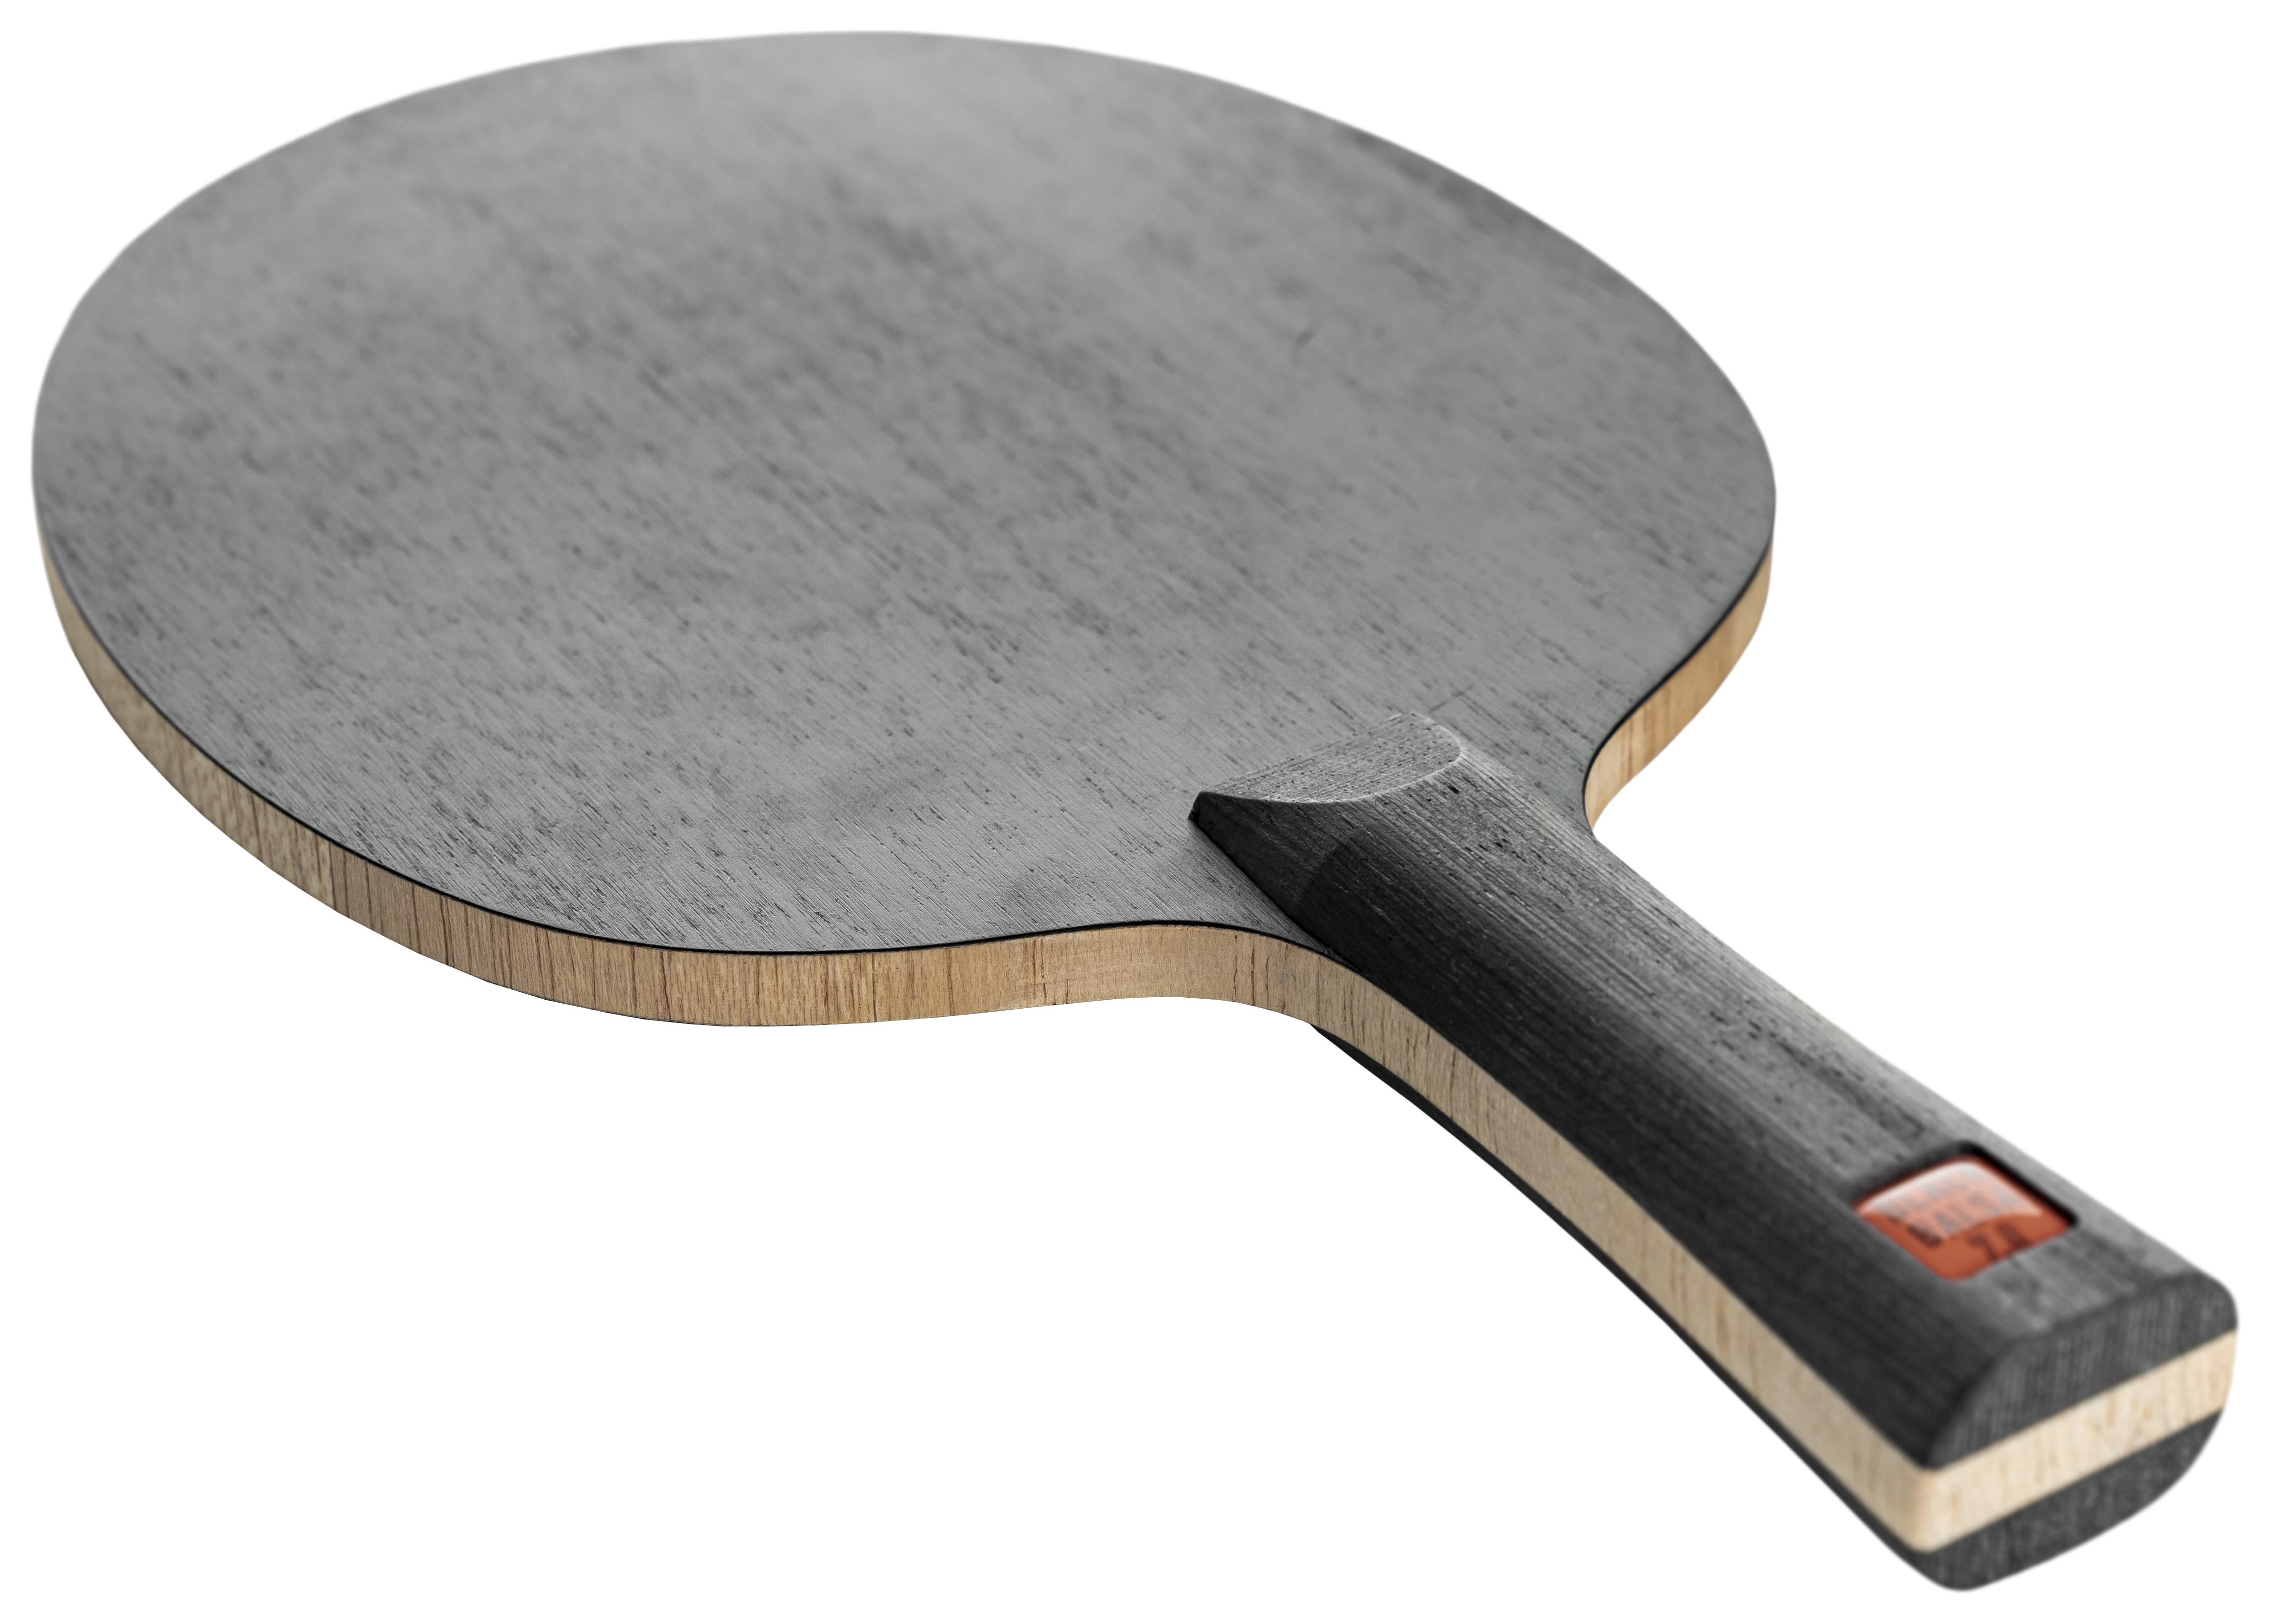 Paddle BLACK BALSA 7.0 FL 26294 New TSP Table Tennis Racket 